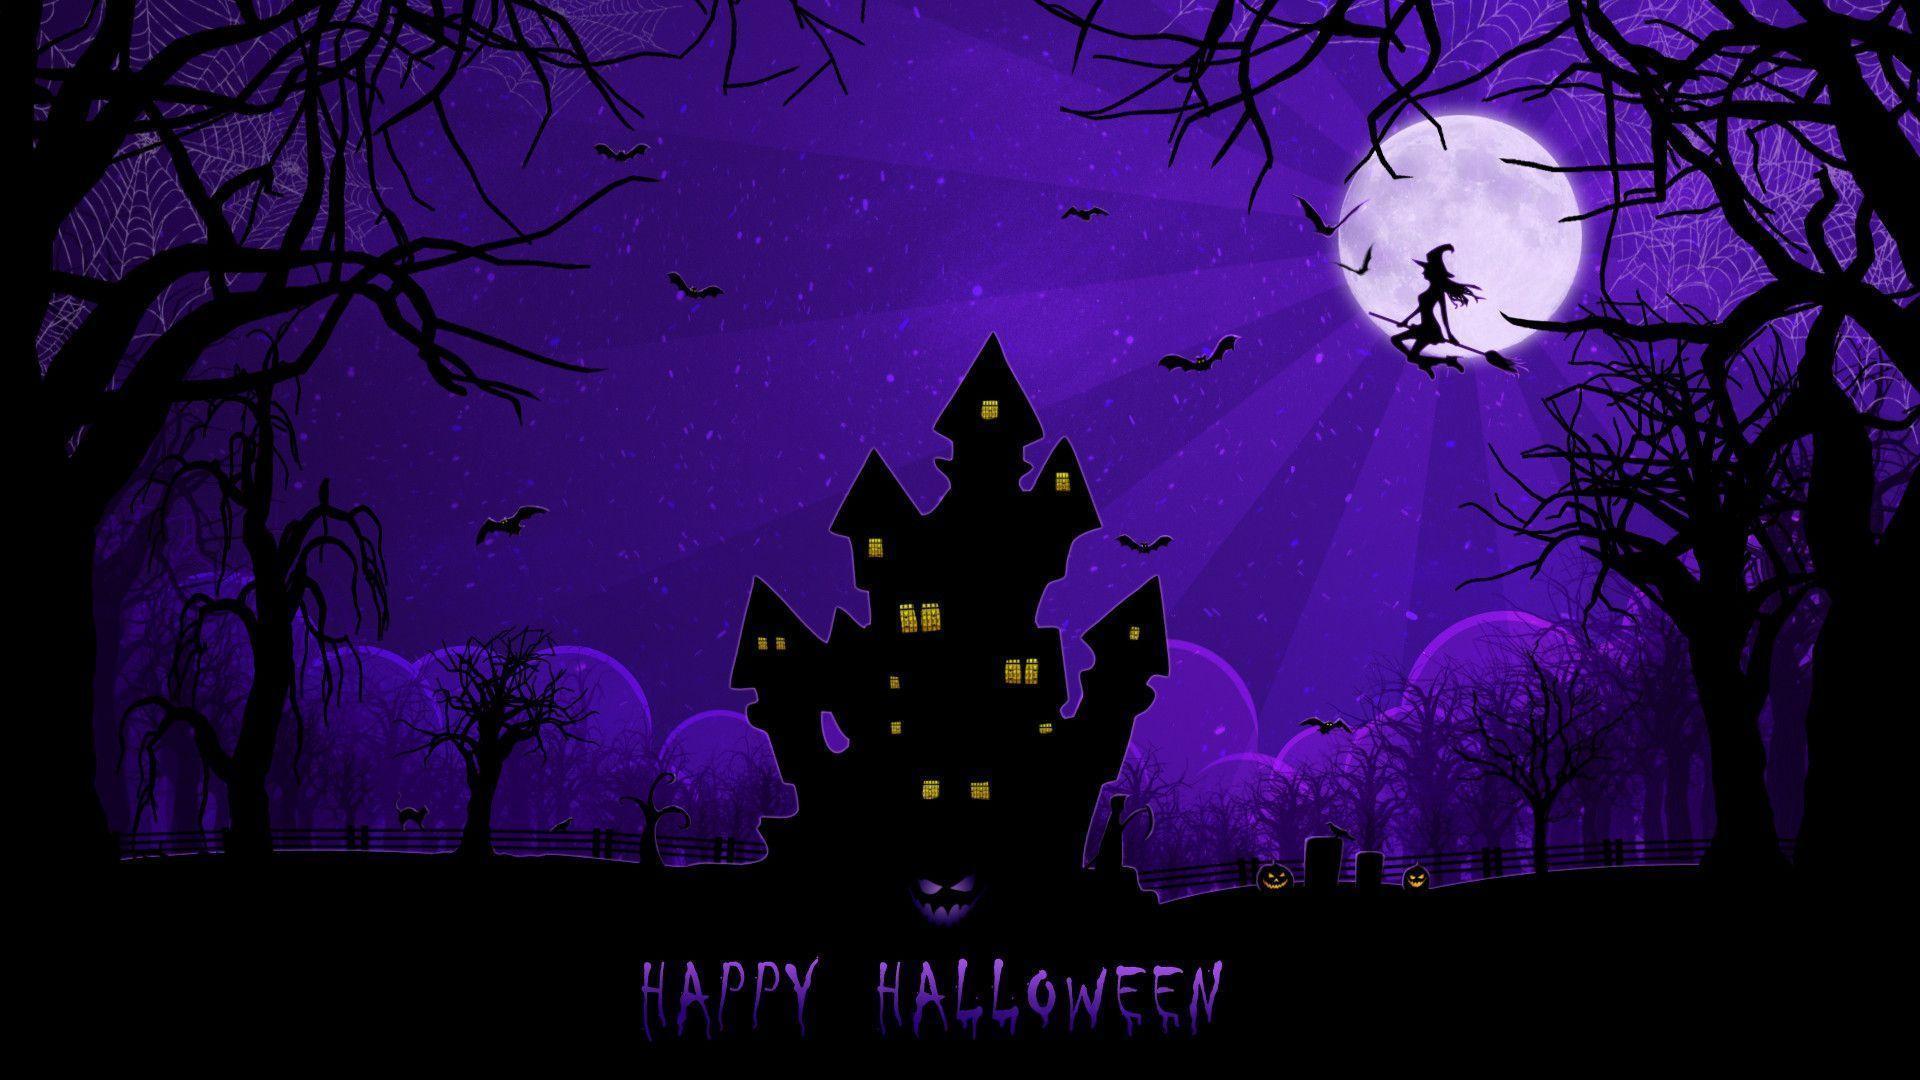 Spooky Wallpaper For Halloween